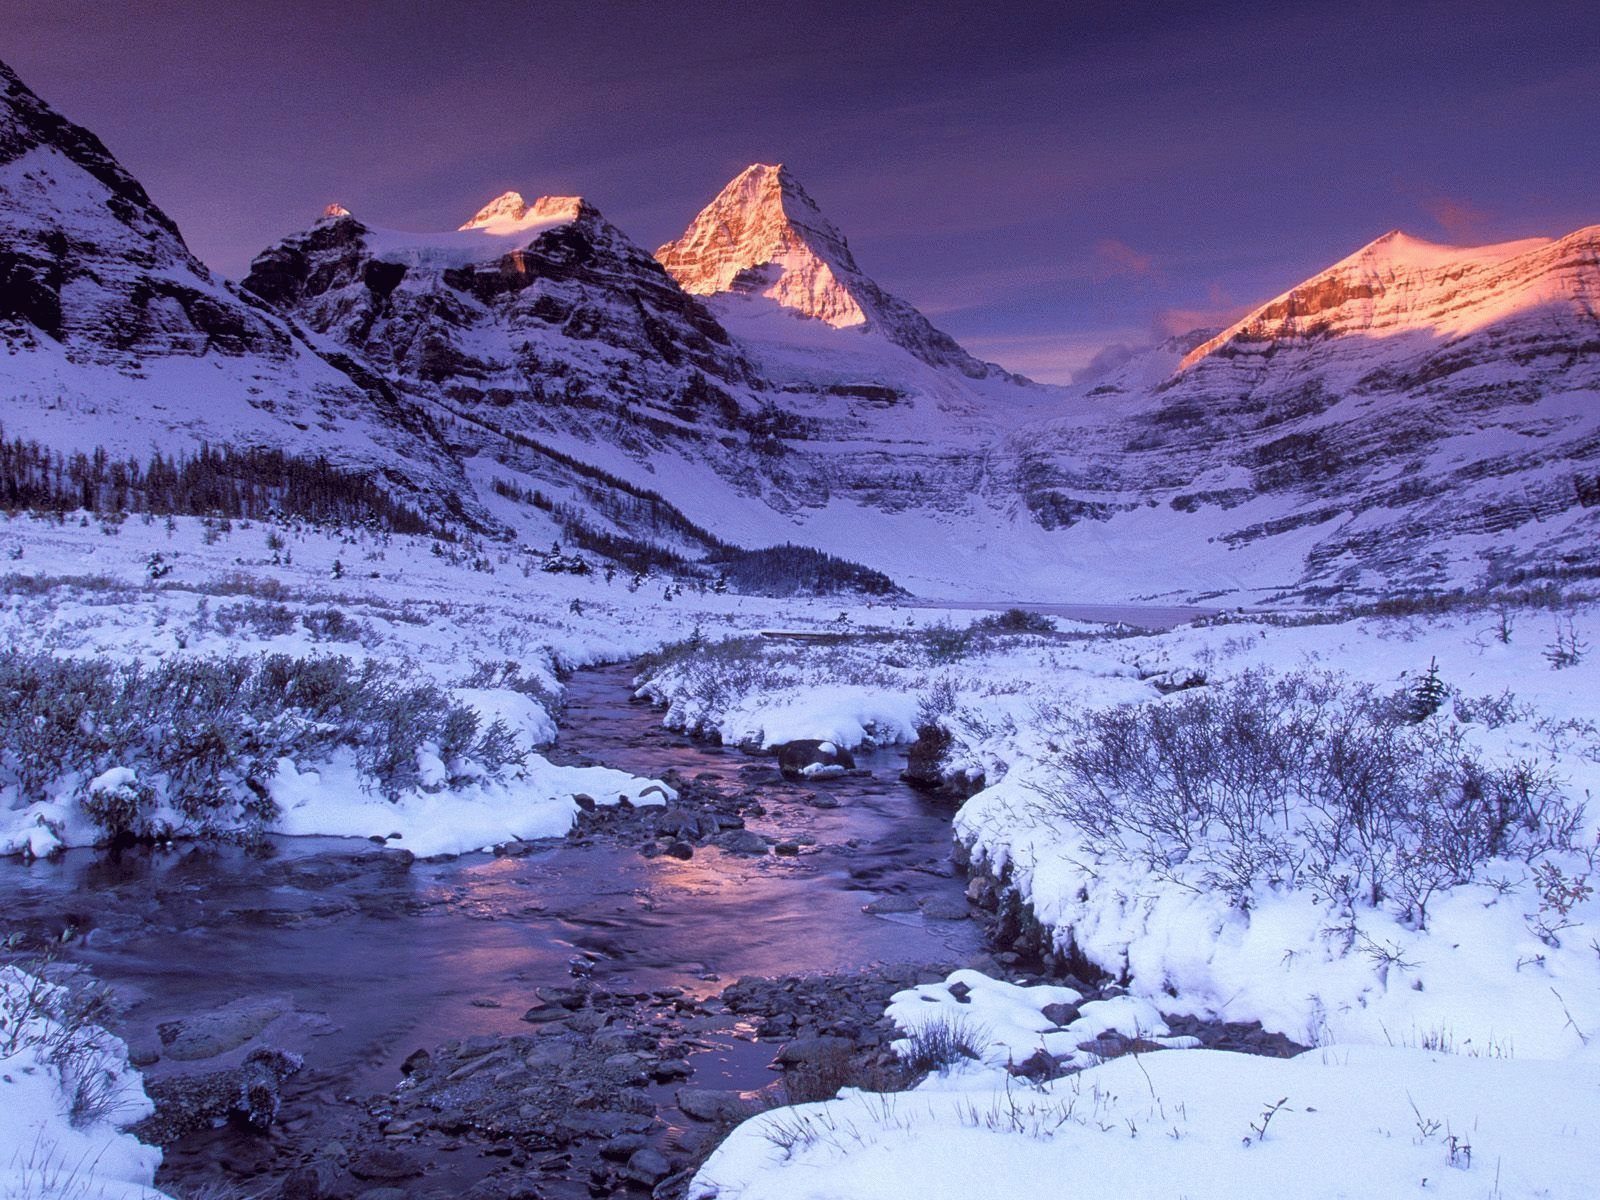 Best ski resorts for winter holidays 2020